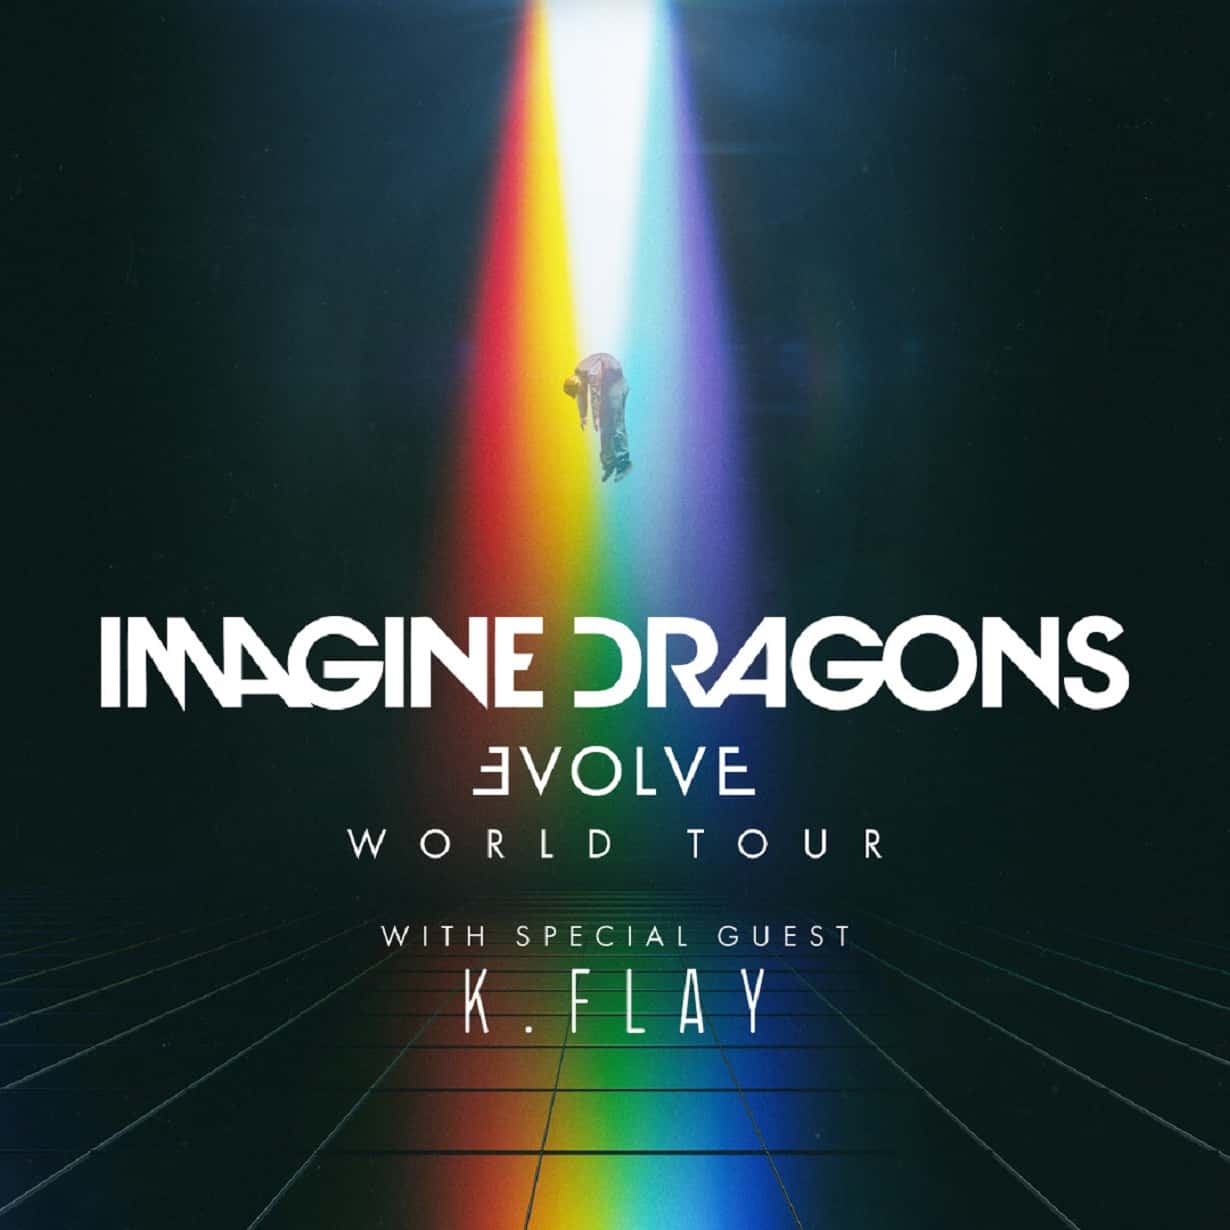 Imagine Dragons “Evolve” Tour Key 103